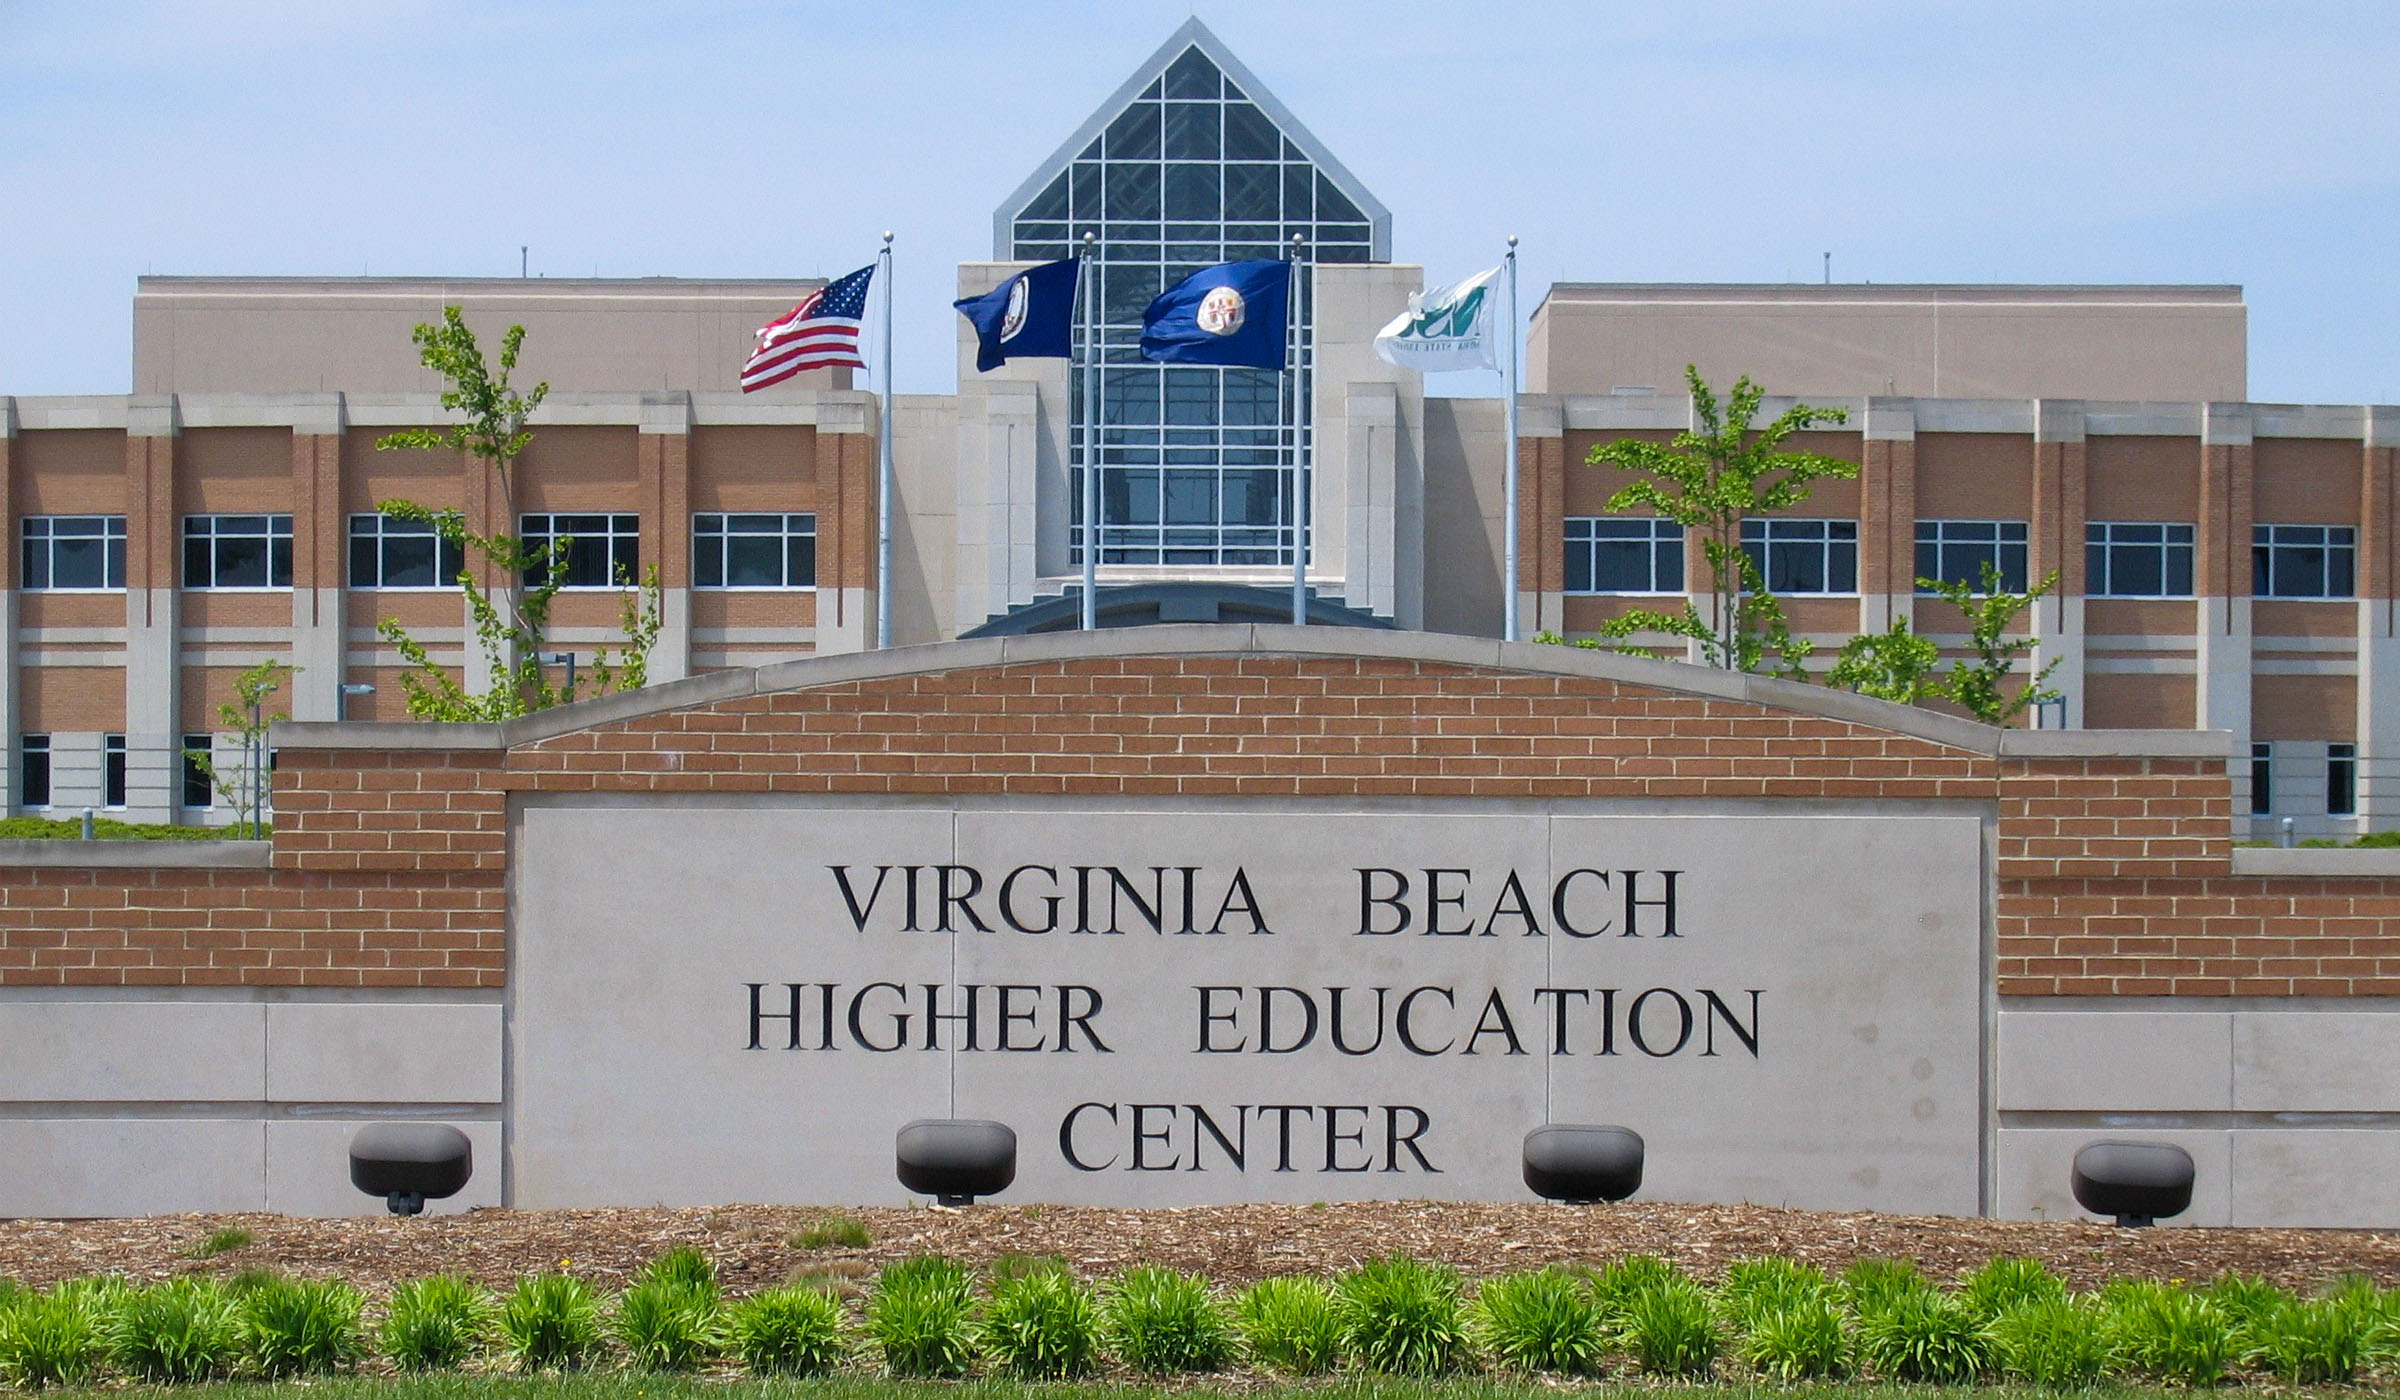 Virginia Beach Higher Education Center